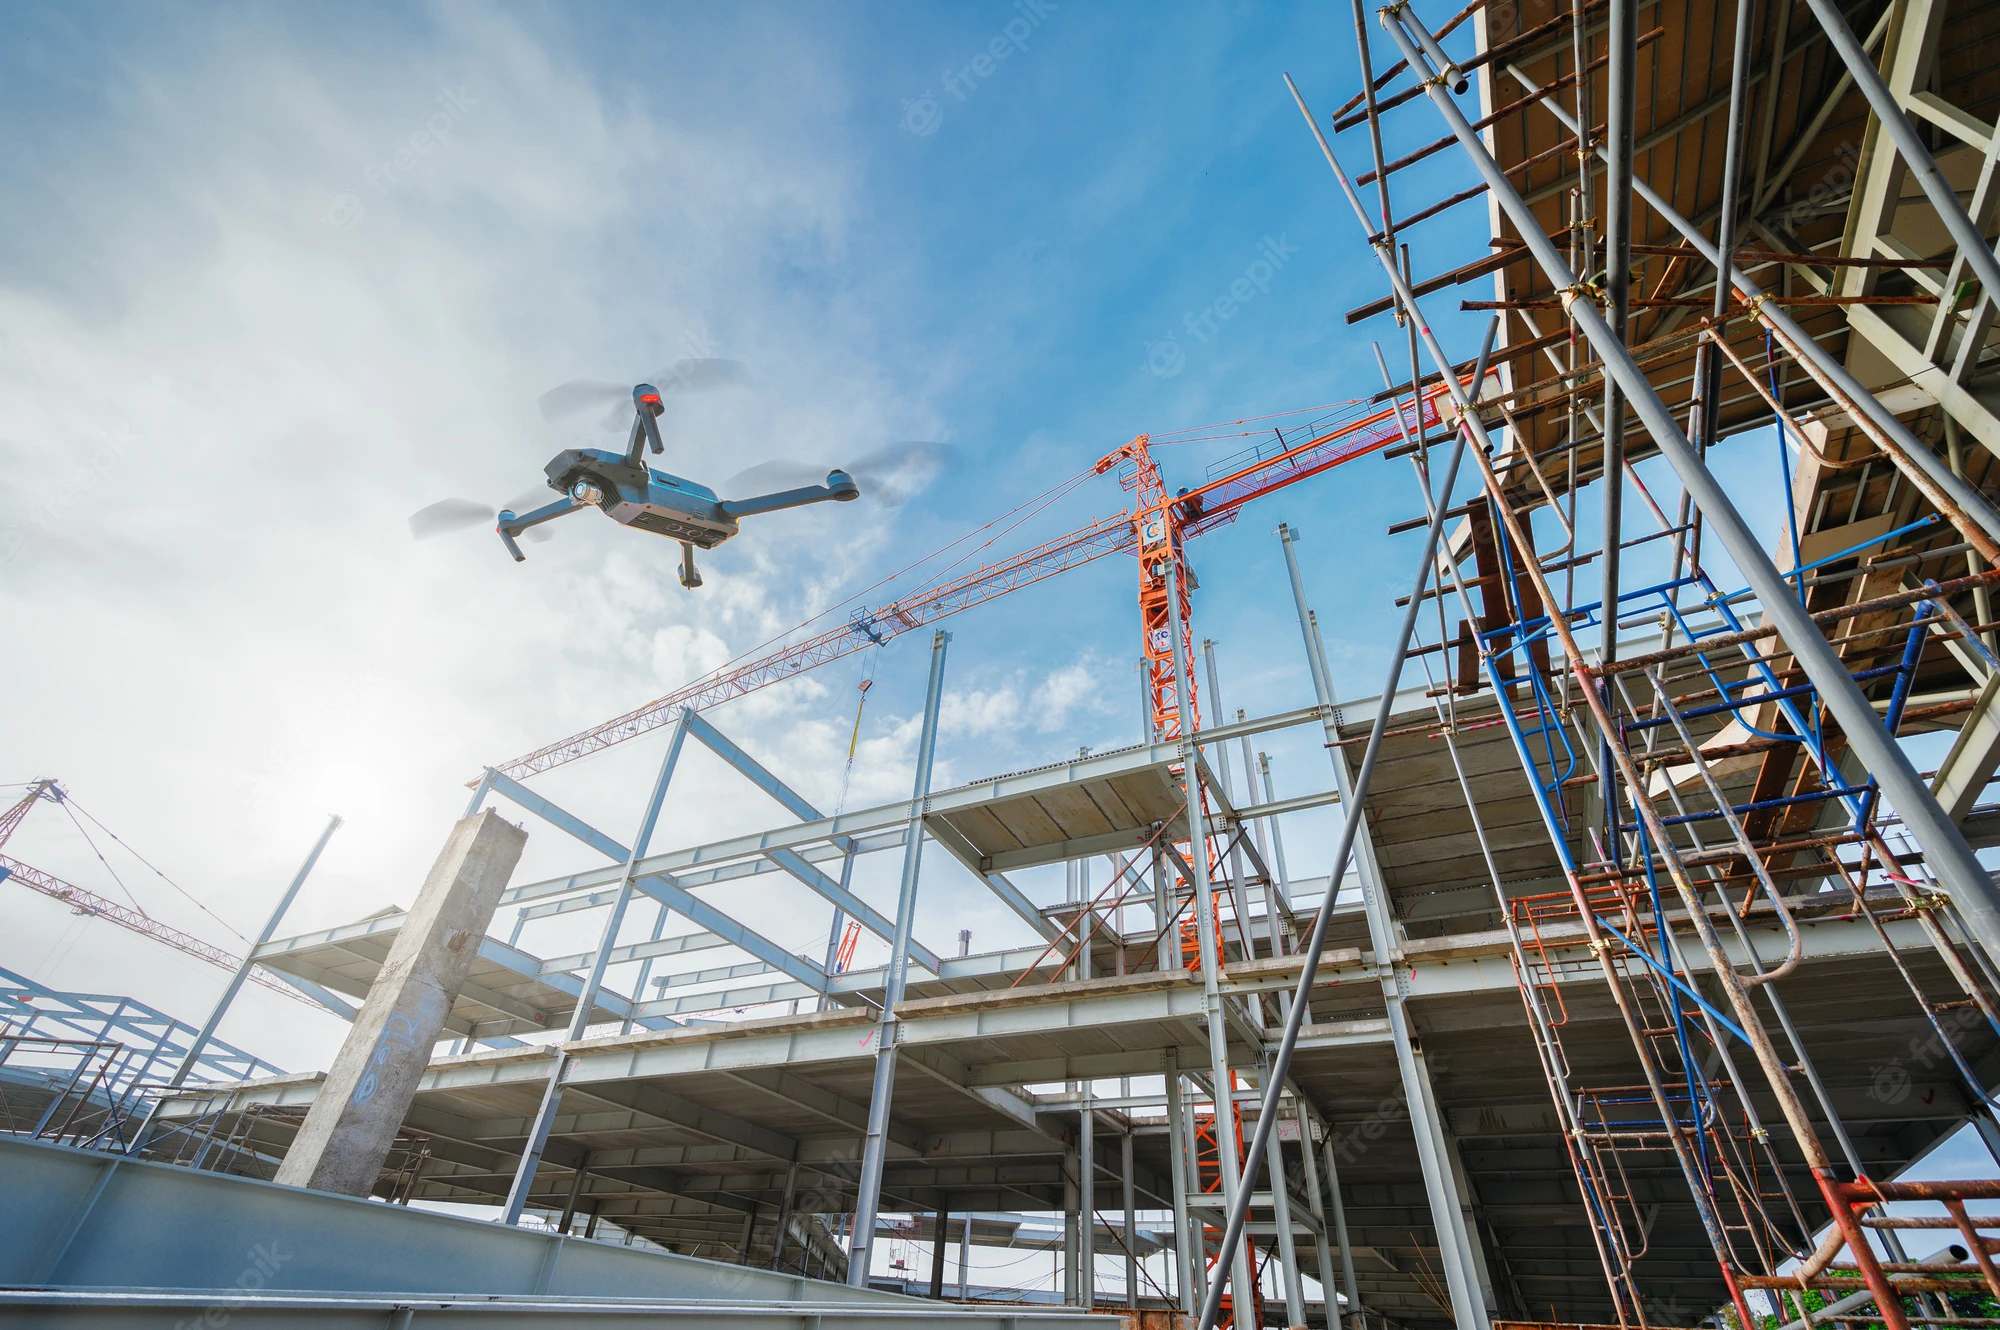 drone-construction-site-surveillance-industrial-inspection_36051-632